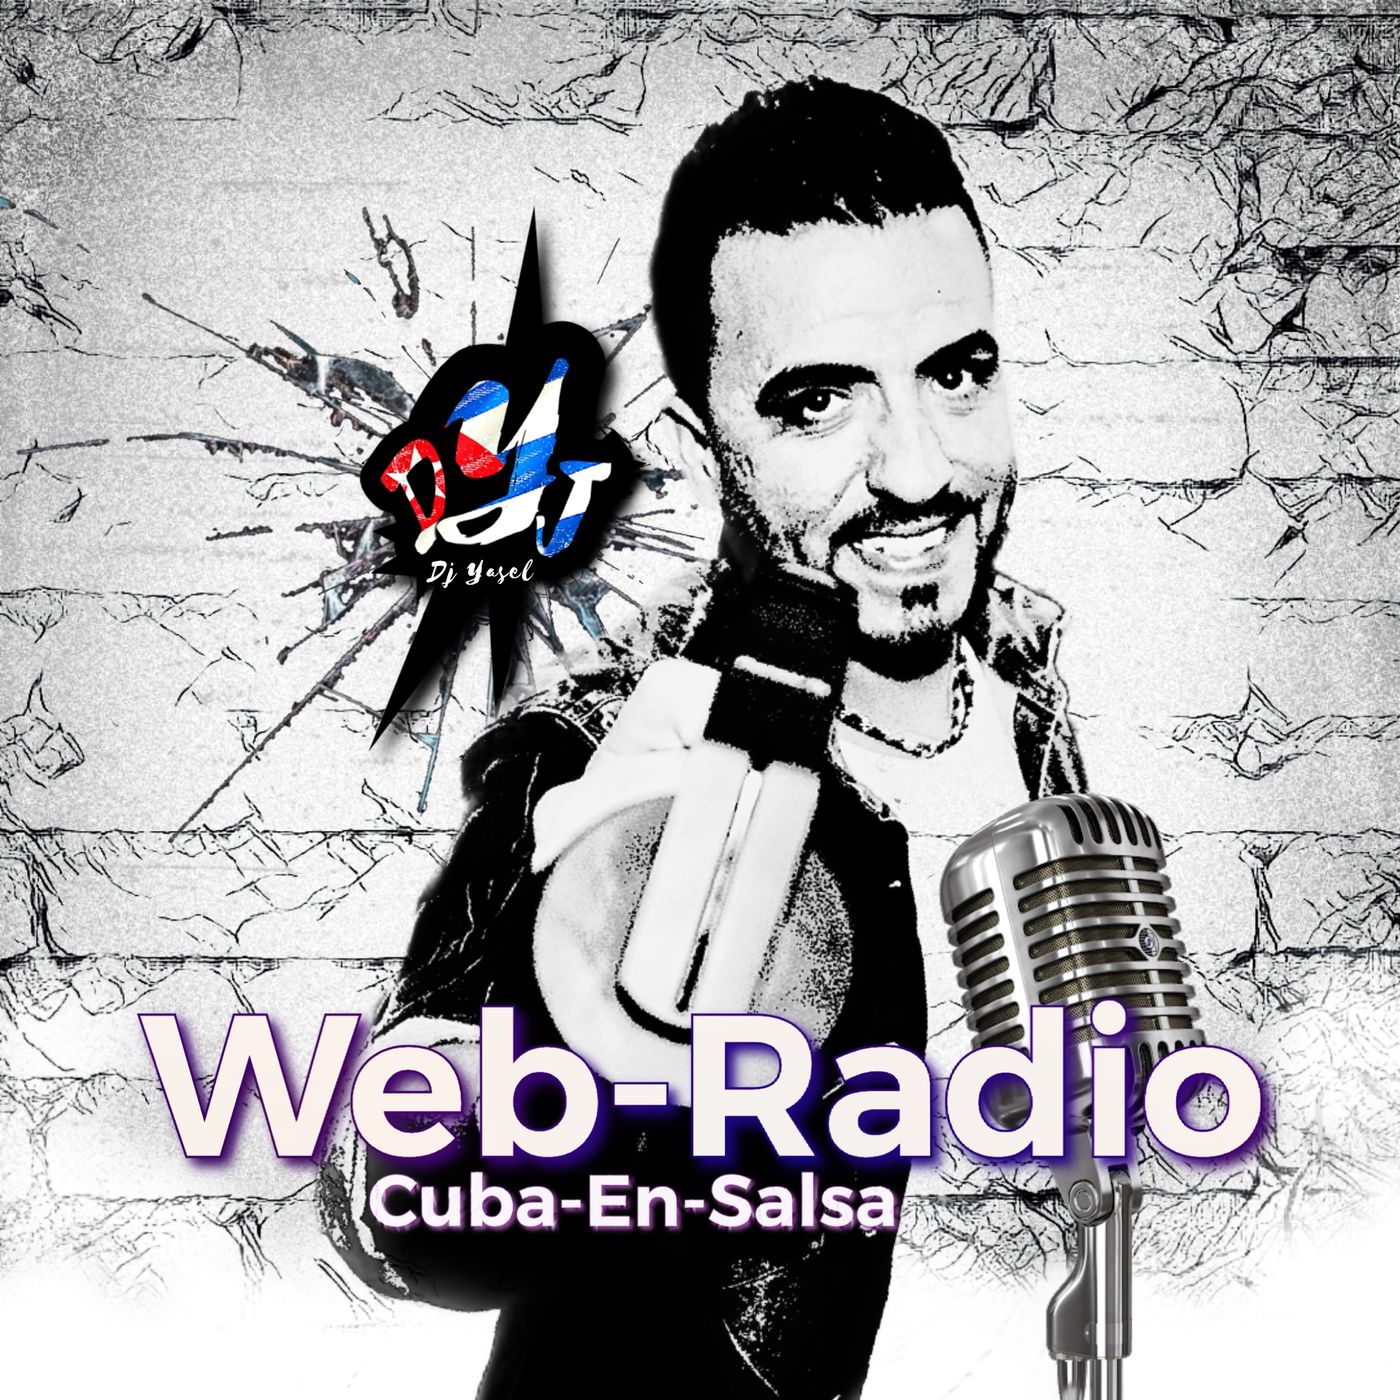 radio web cuba en salsa (DJ YASEL)